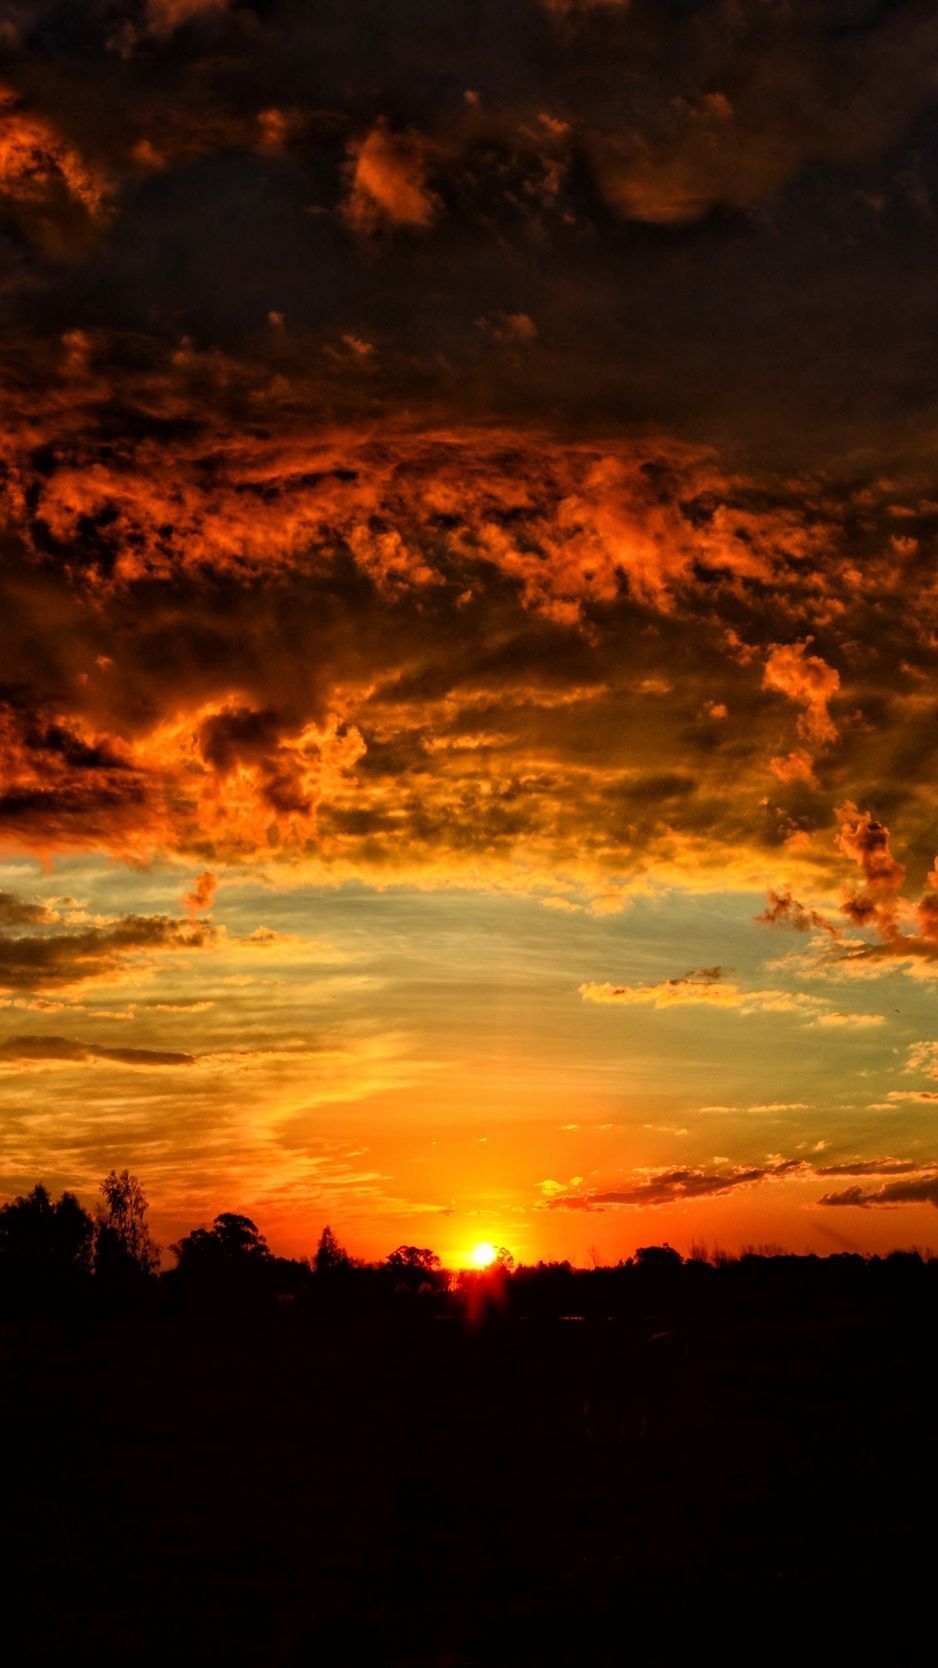 Sunset, clouds, orange sky wallpaper, background iphone. Sky aesthetic, Orange sky, Background